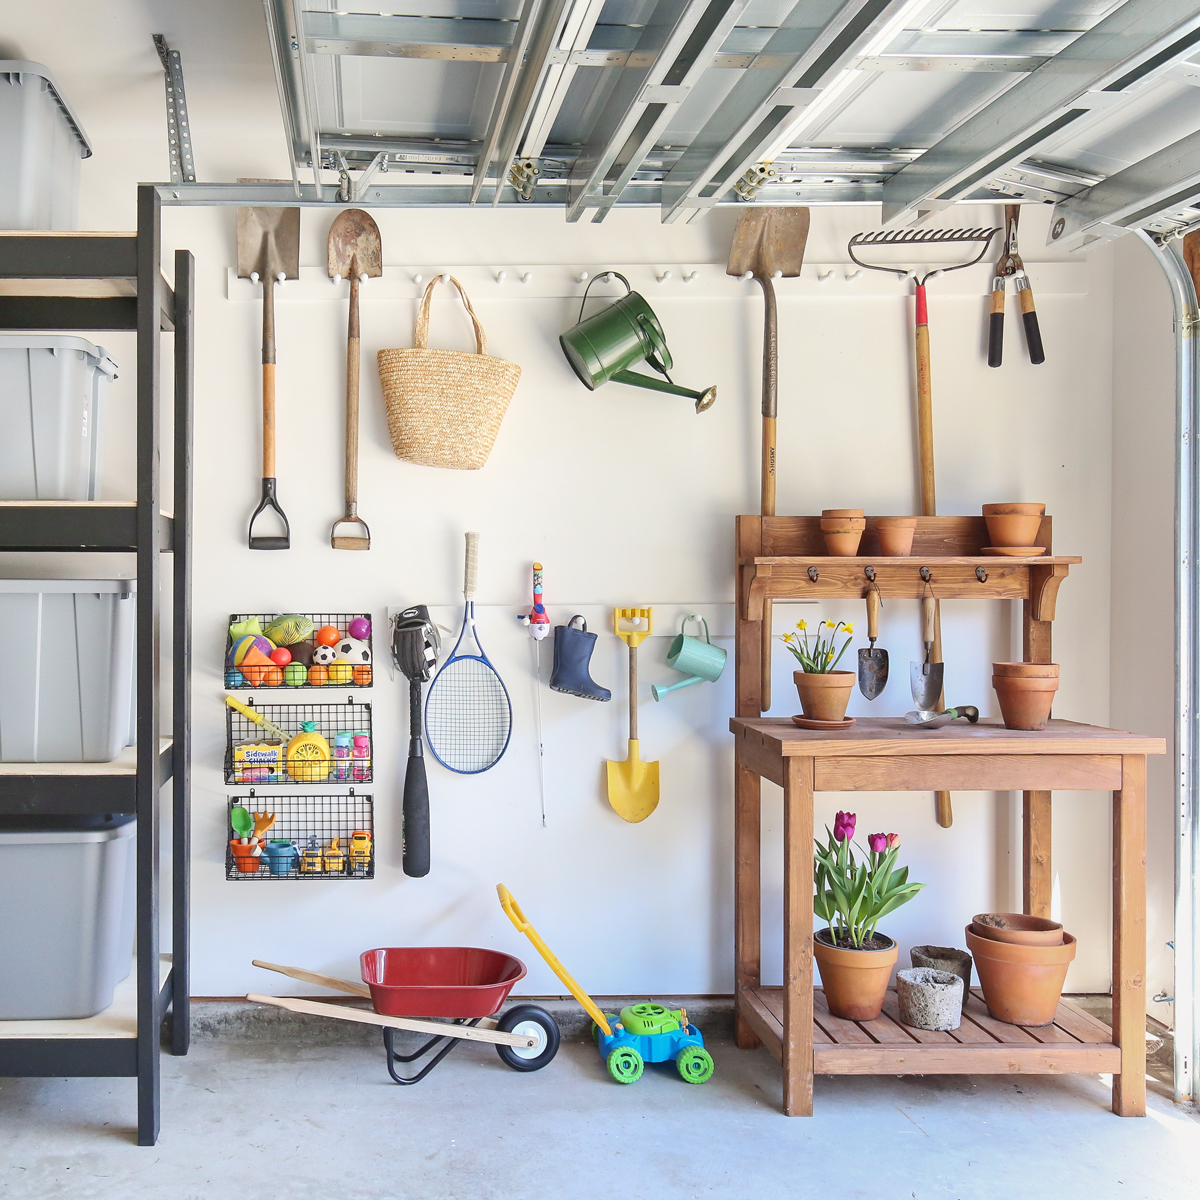 DIY garage organization and DIY garage storage ideas on a budget